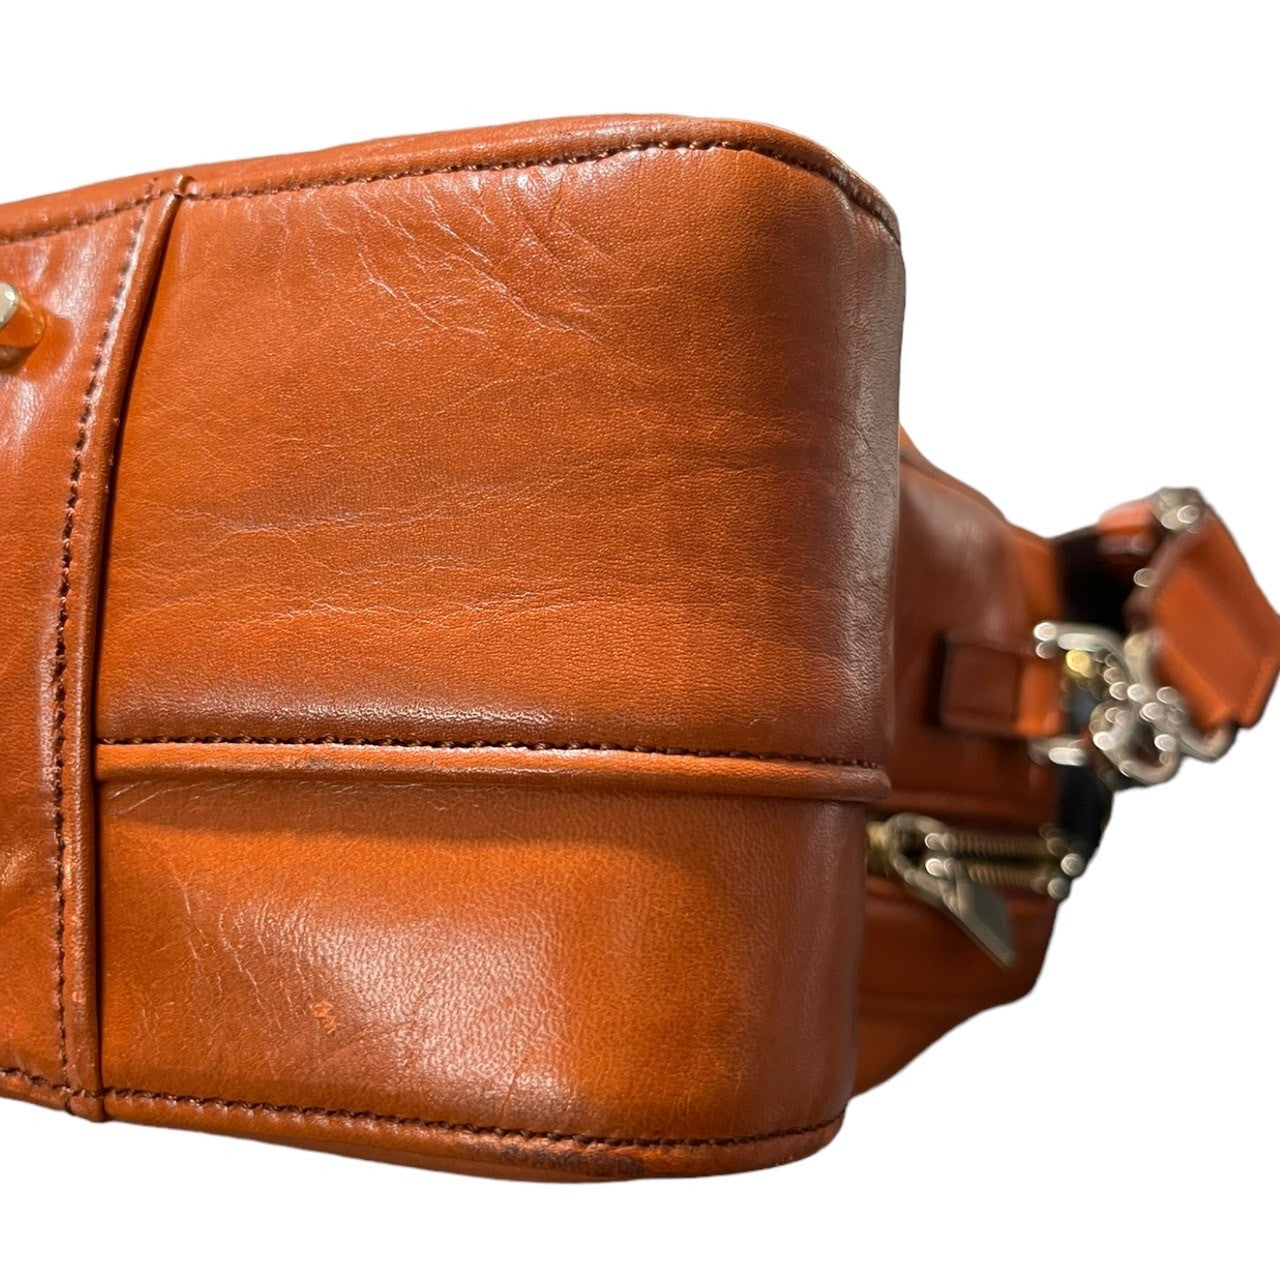 aniary(アニアリ) 2WAY leather briefcase 2WAY レザー ブリーフケース ビジネス バッグ ハンド ショルダー